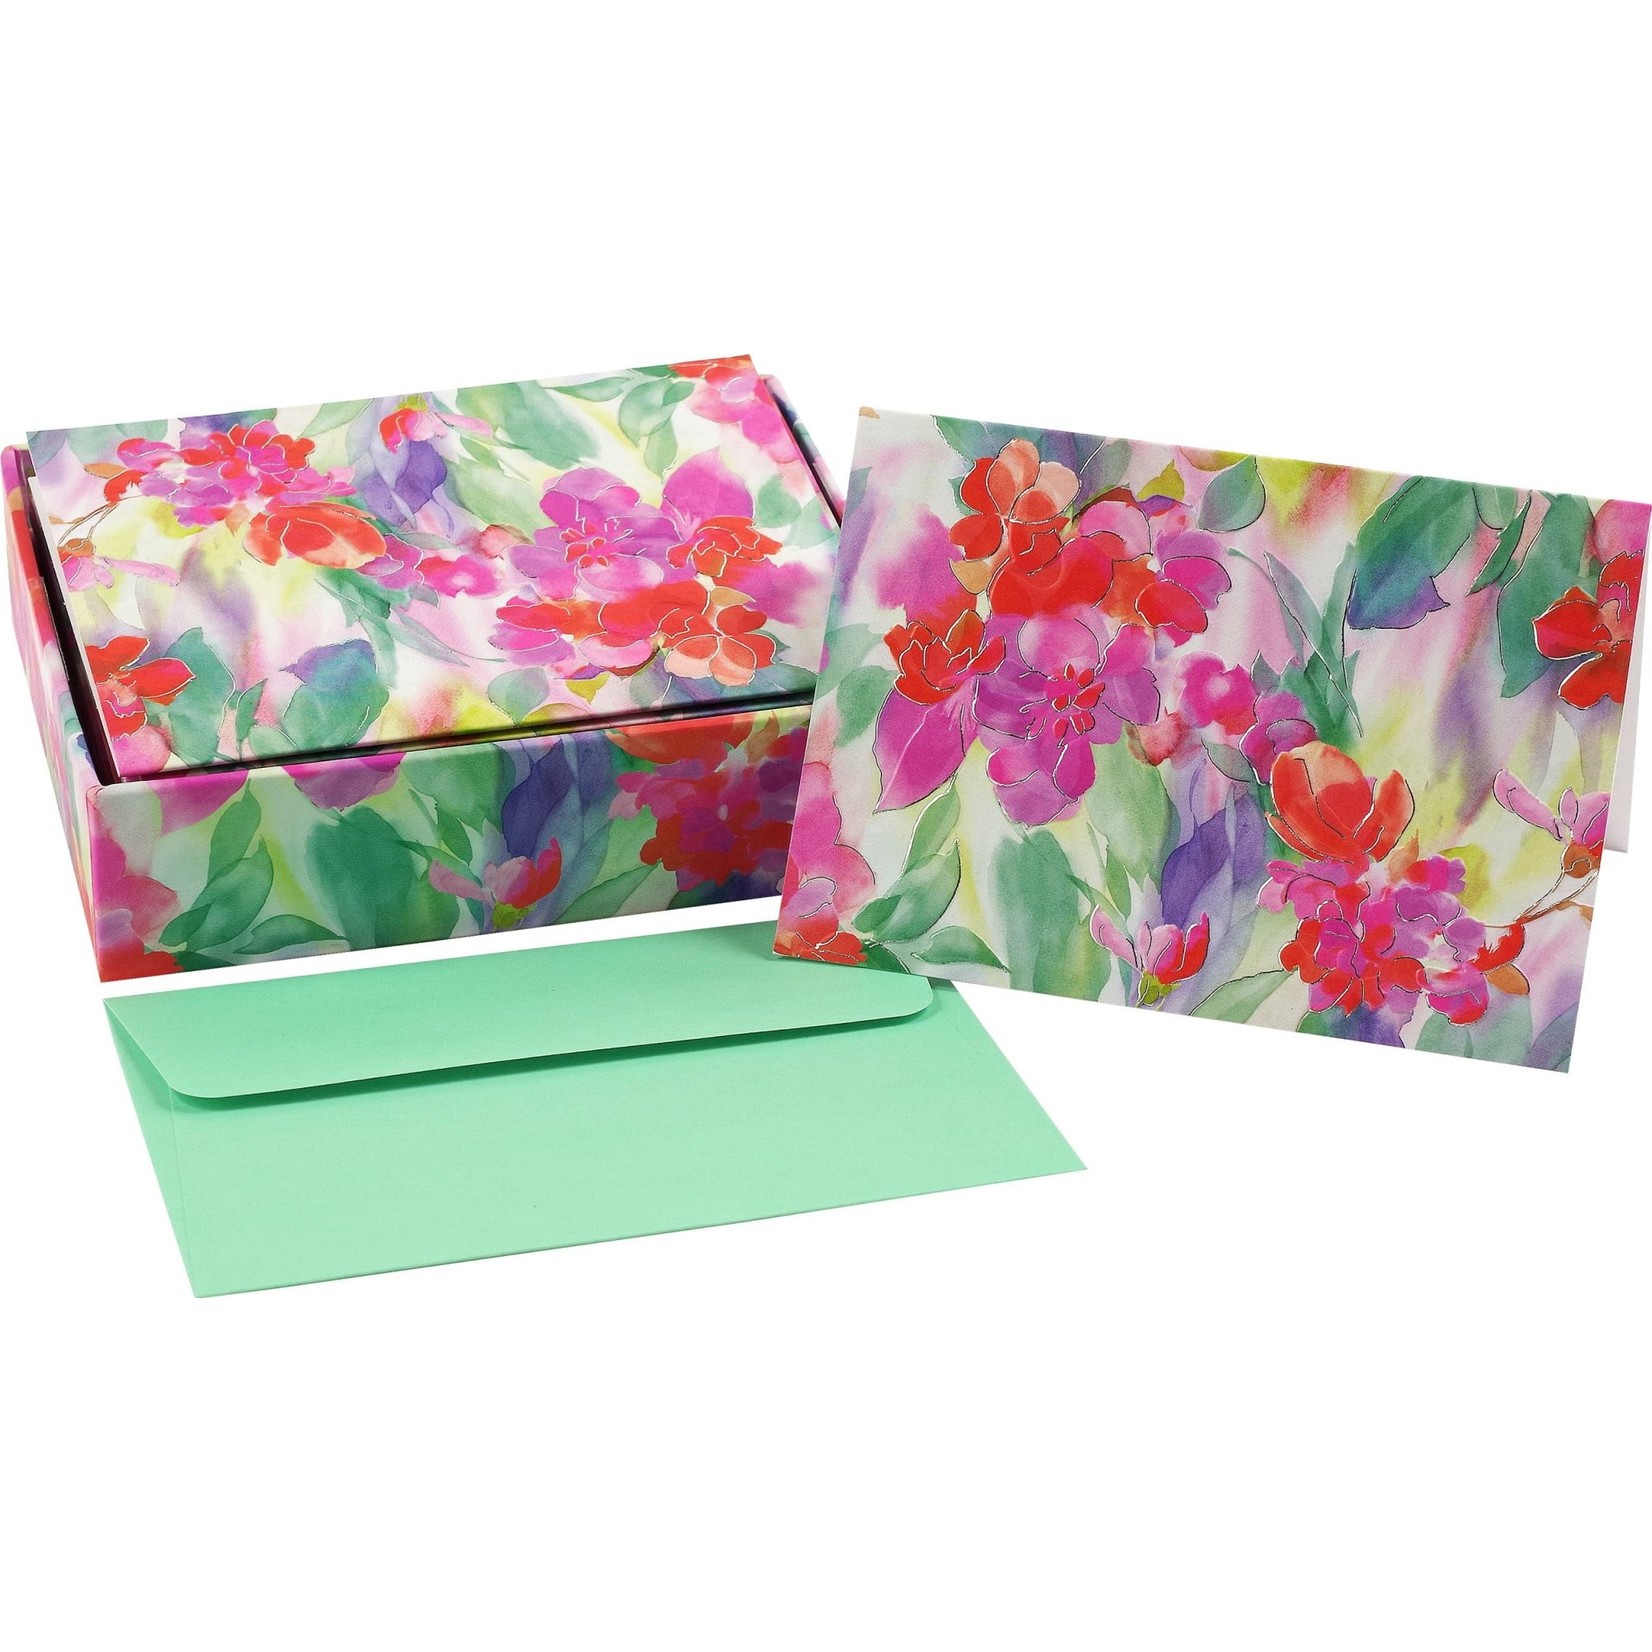 Peter Pauper Press Boxed Note Cards: Watercolor Petals